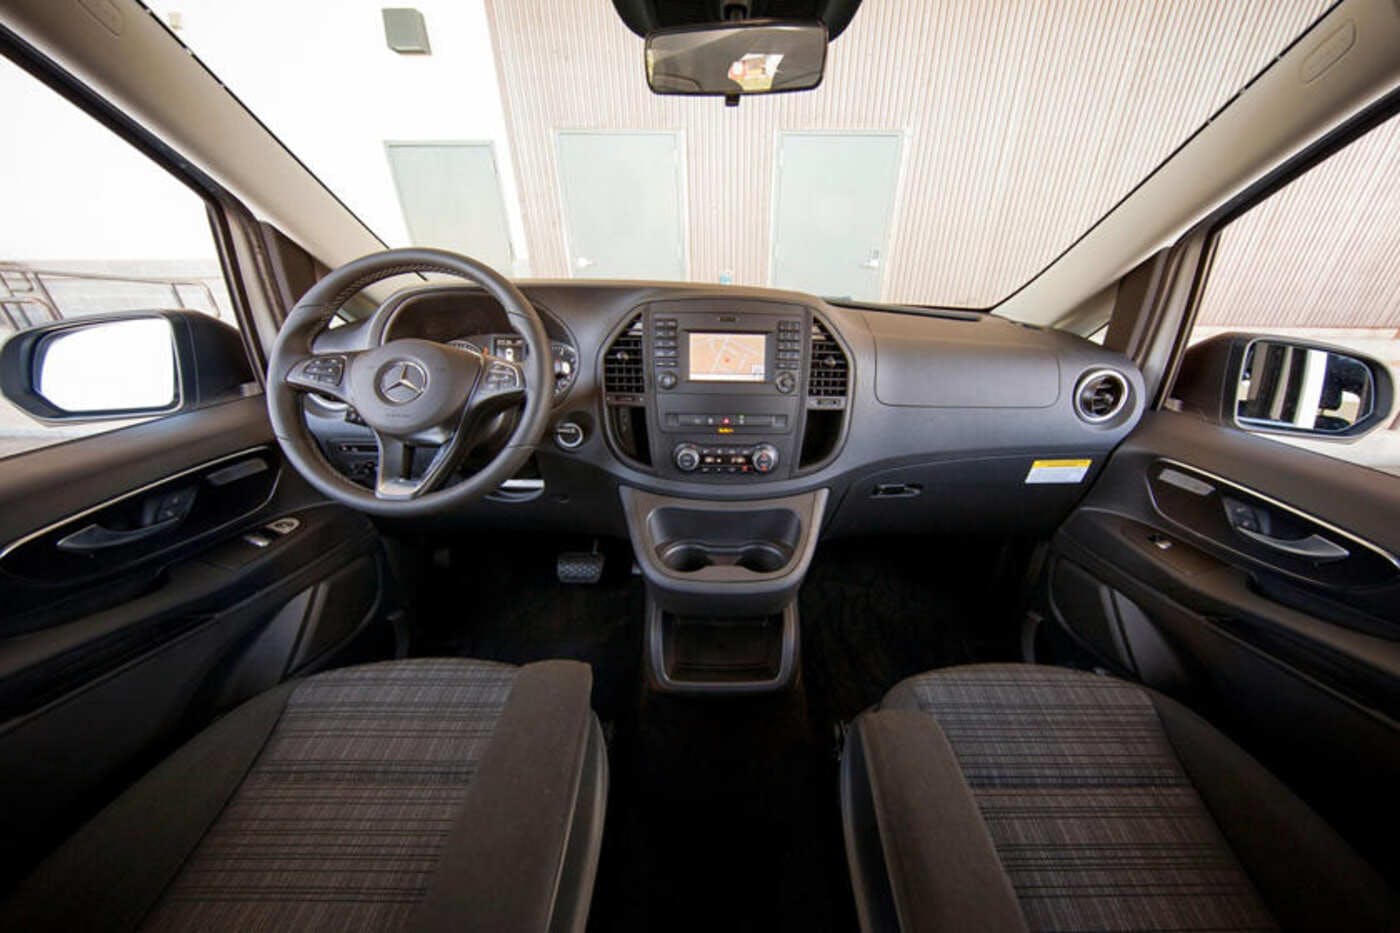 Passenger Mercedes Van Interior